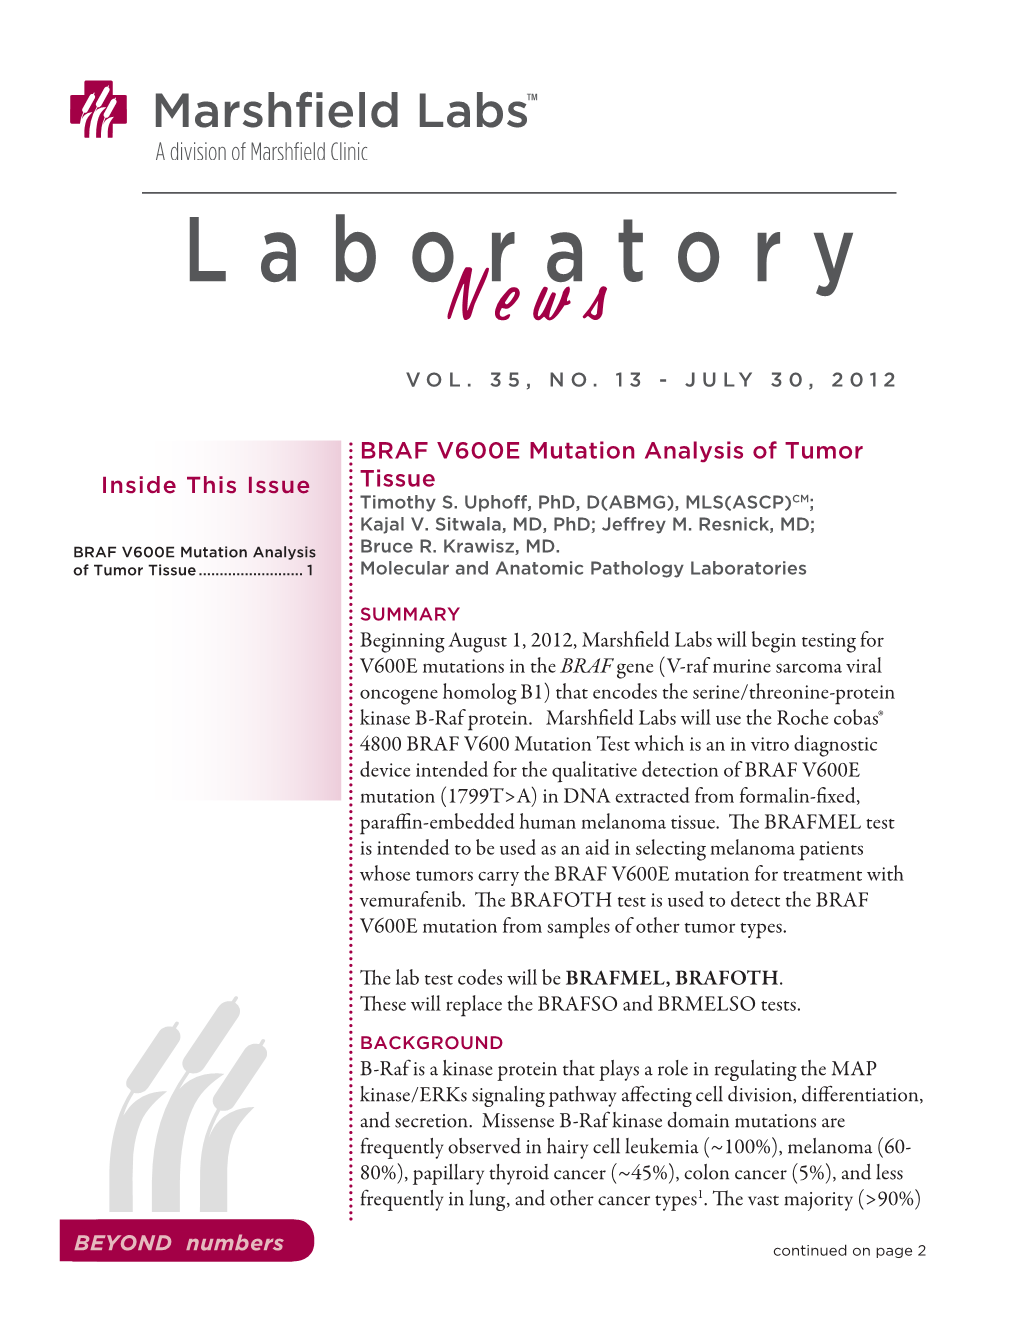 BRAF V600E Mutation Analysis of Tumor Tissue